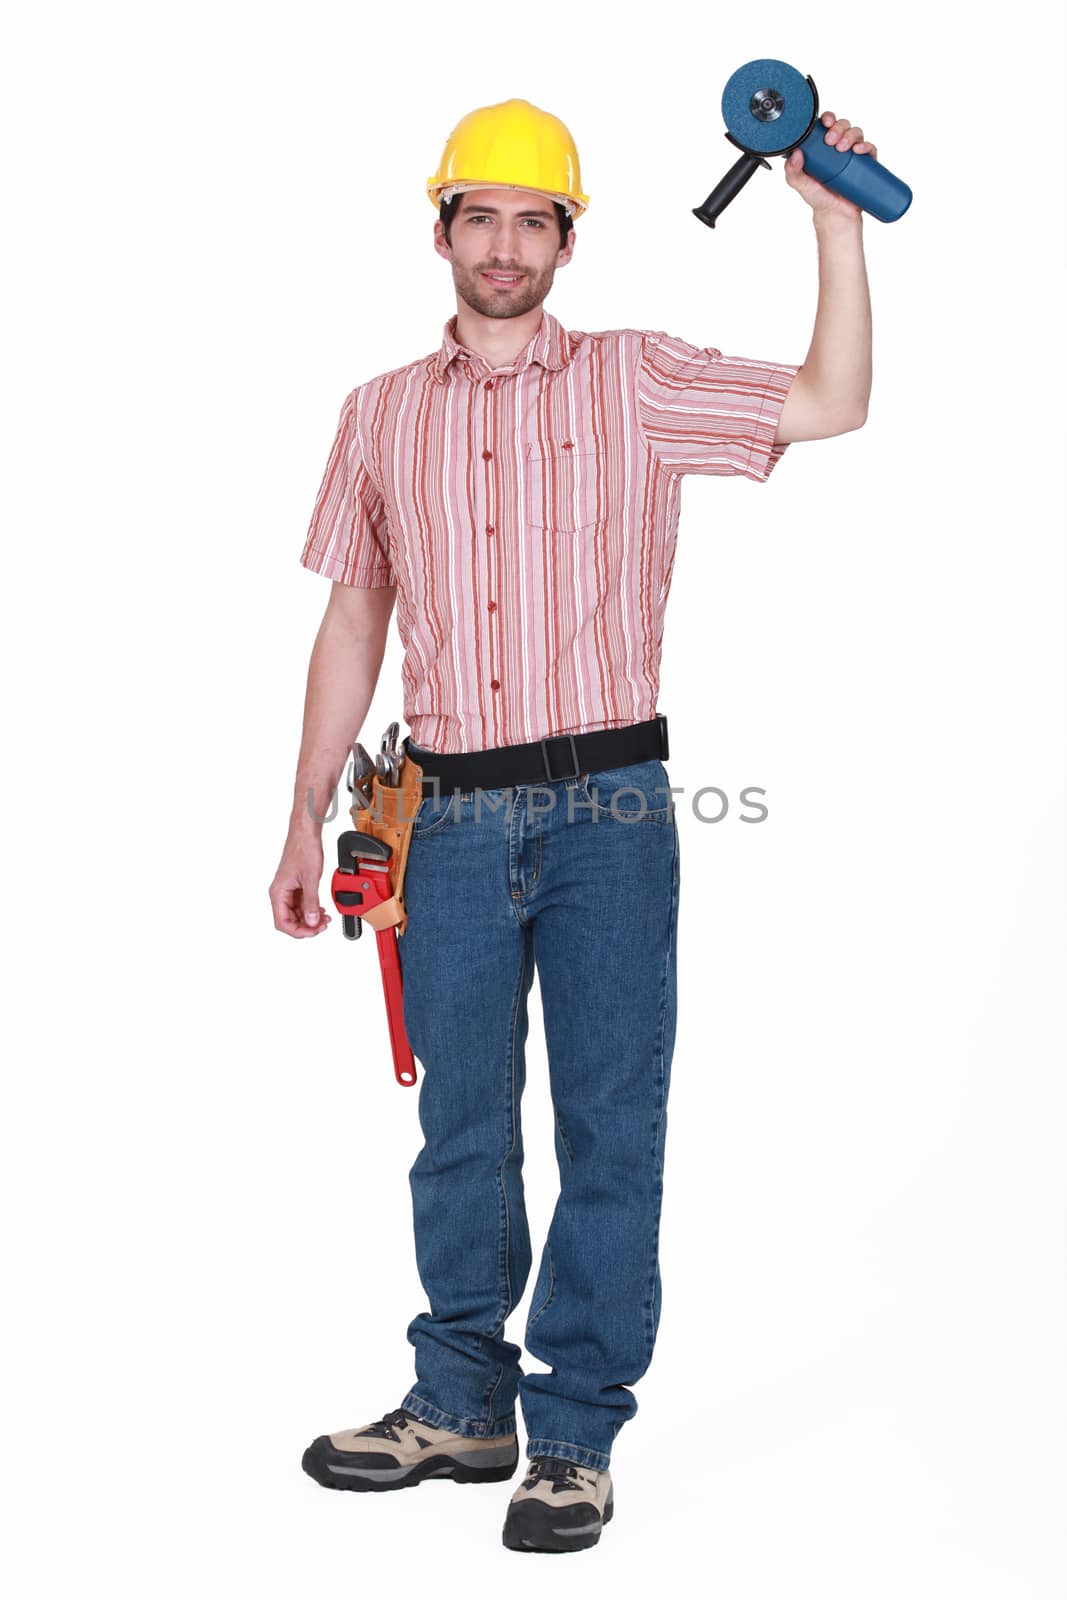 A handyman holding a grinding machine.